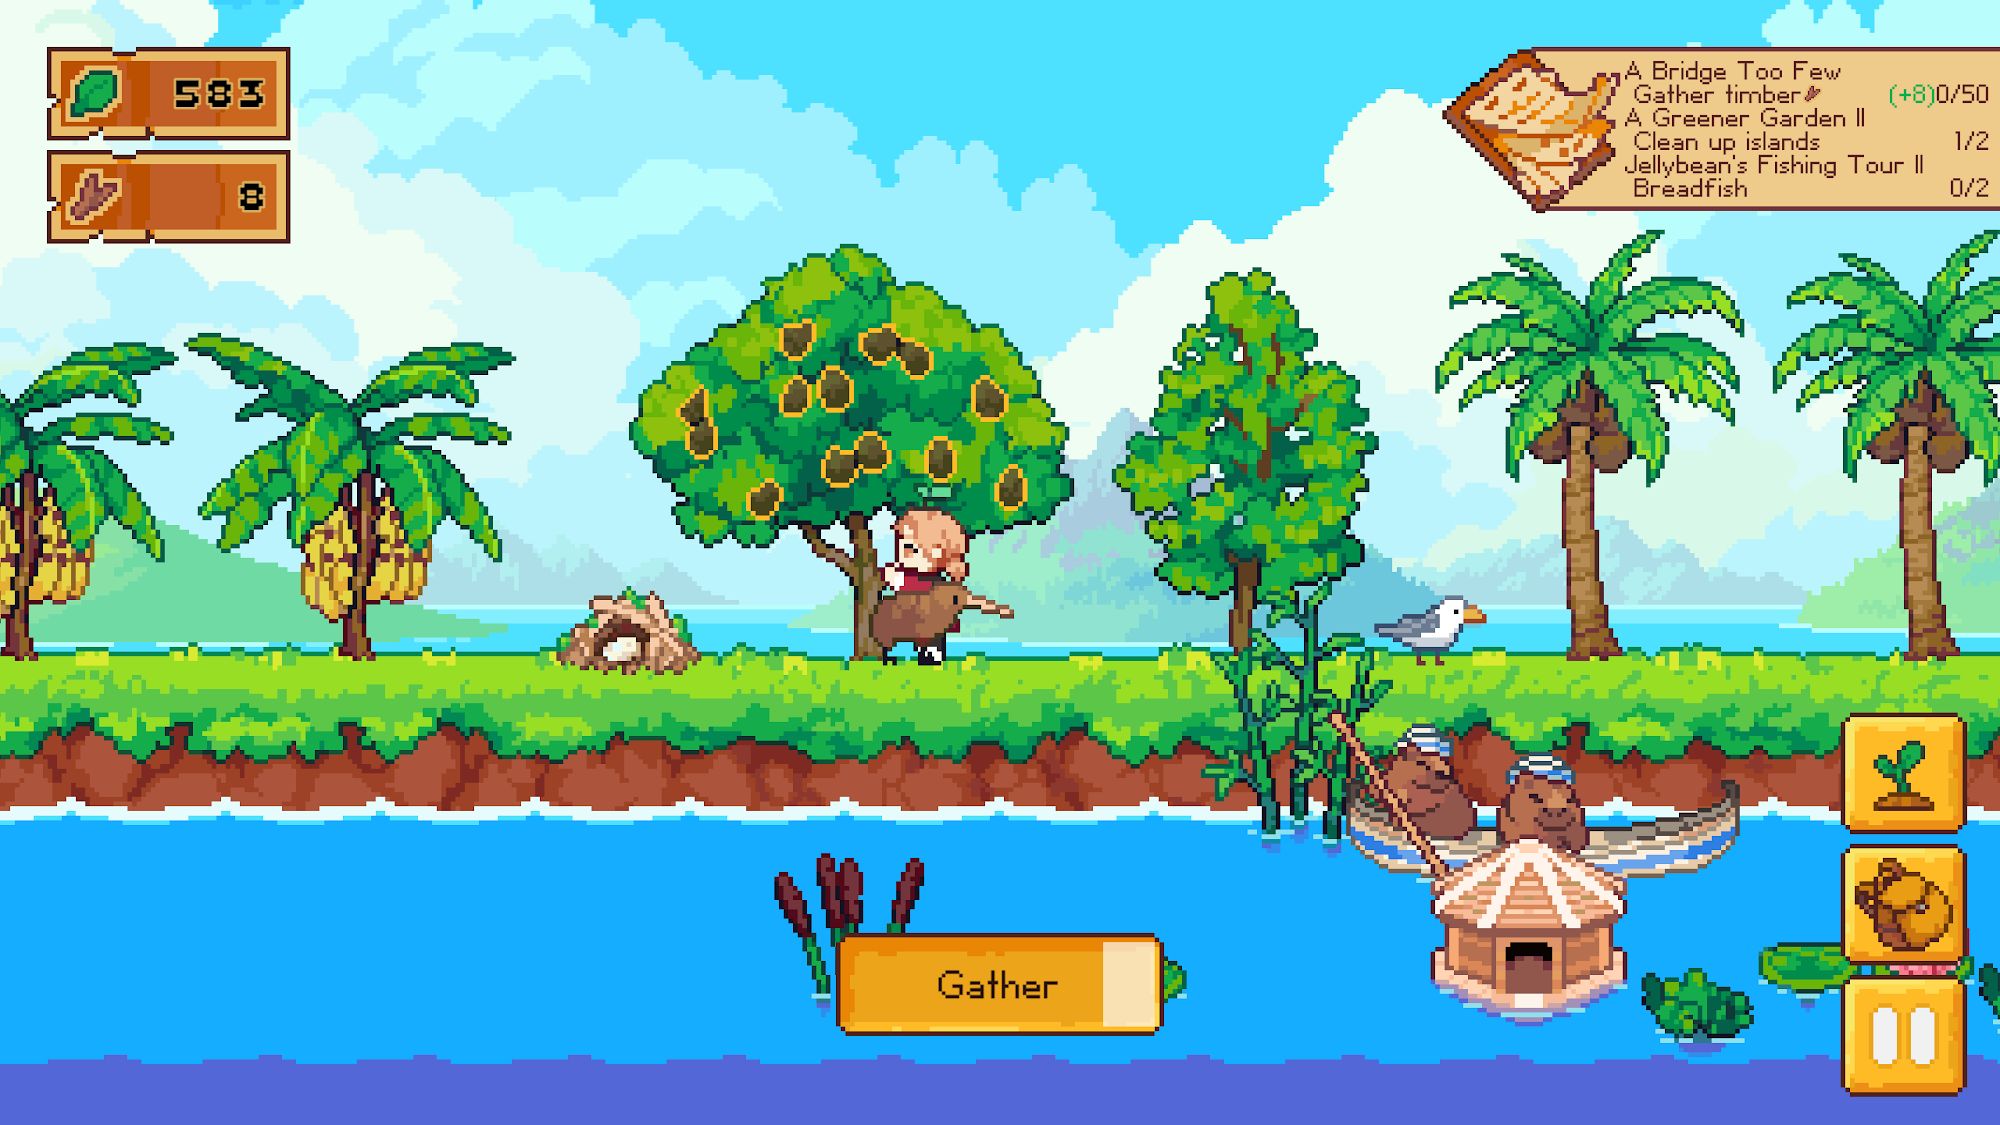 Luna's Fishing Garden - Android game screenshots.